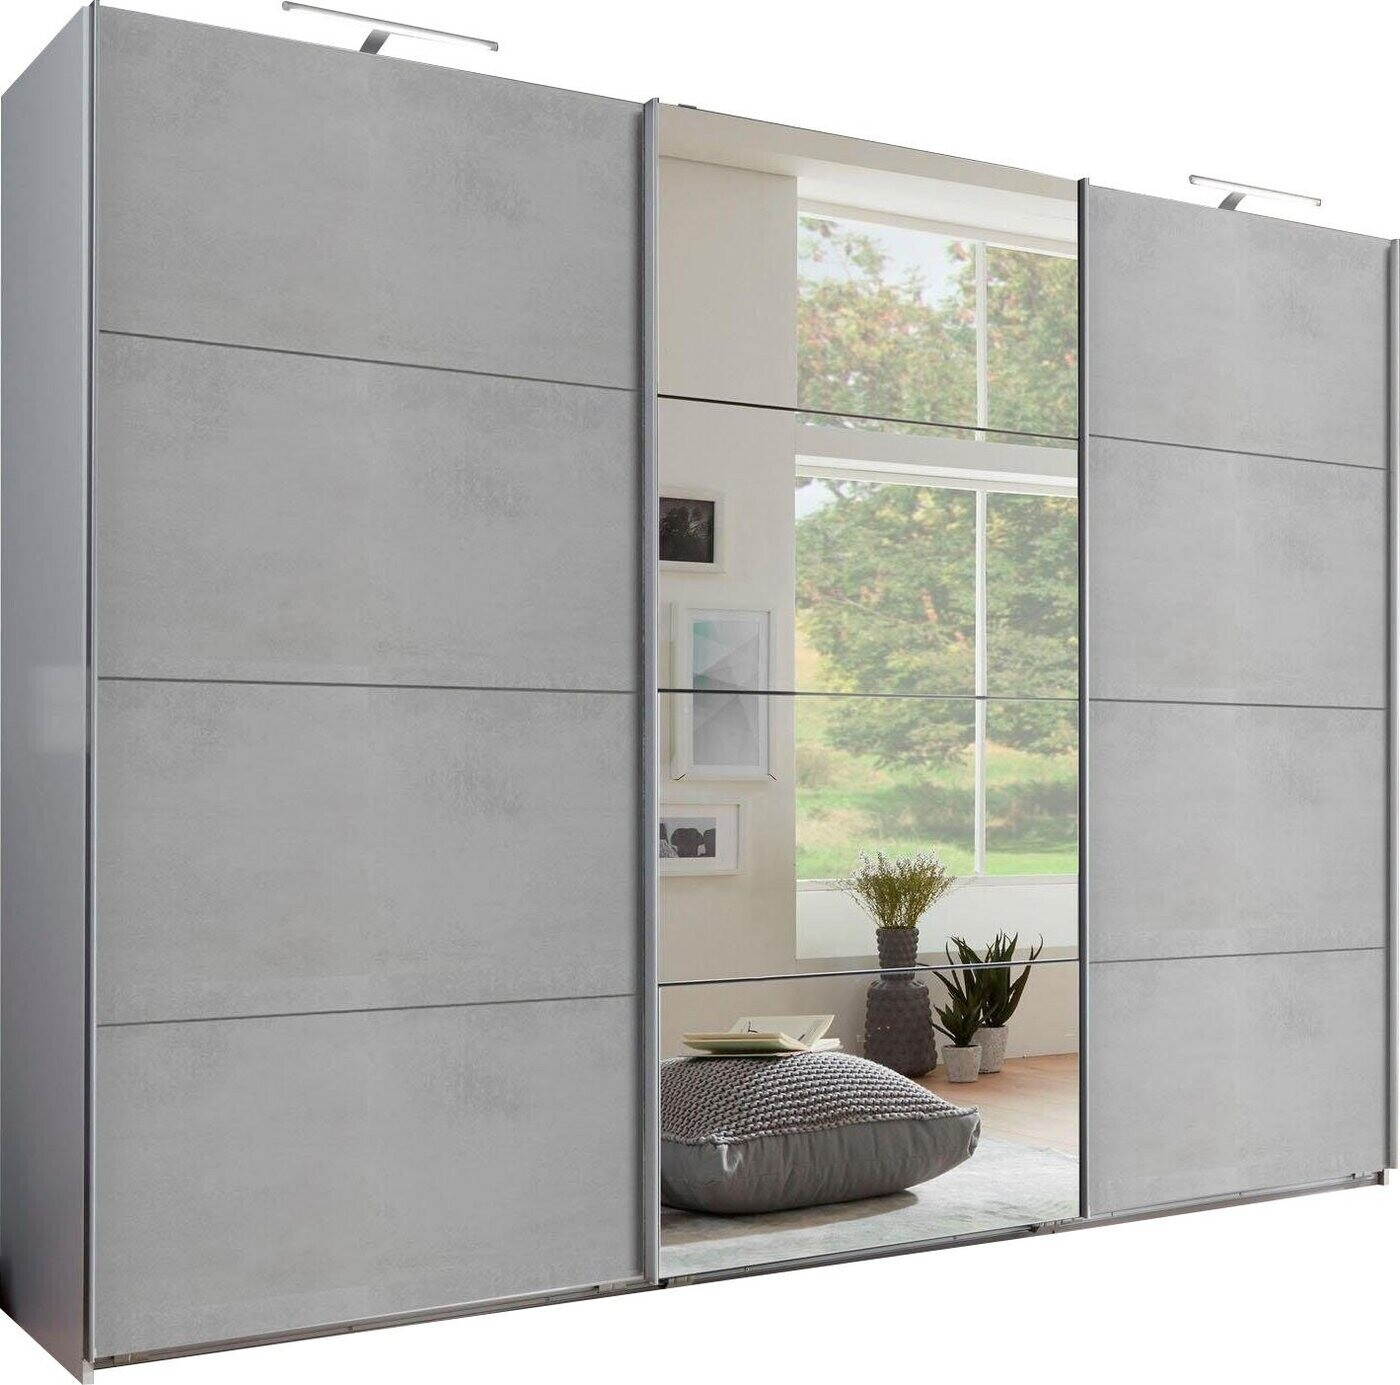 Wimex Ernie 270x210cm beton/lichtgrau ab 579,99 € | Preisvergleich bei